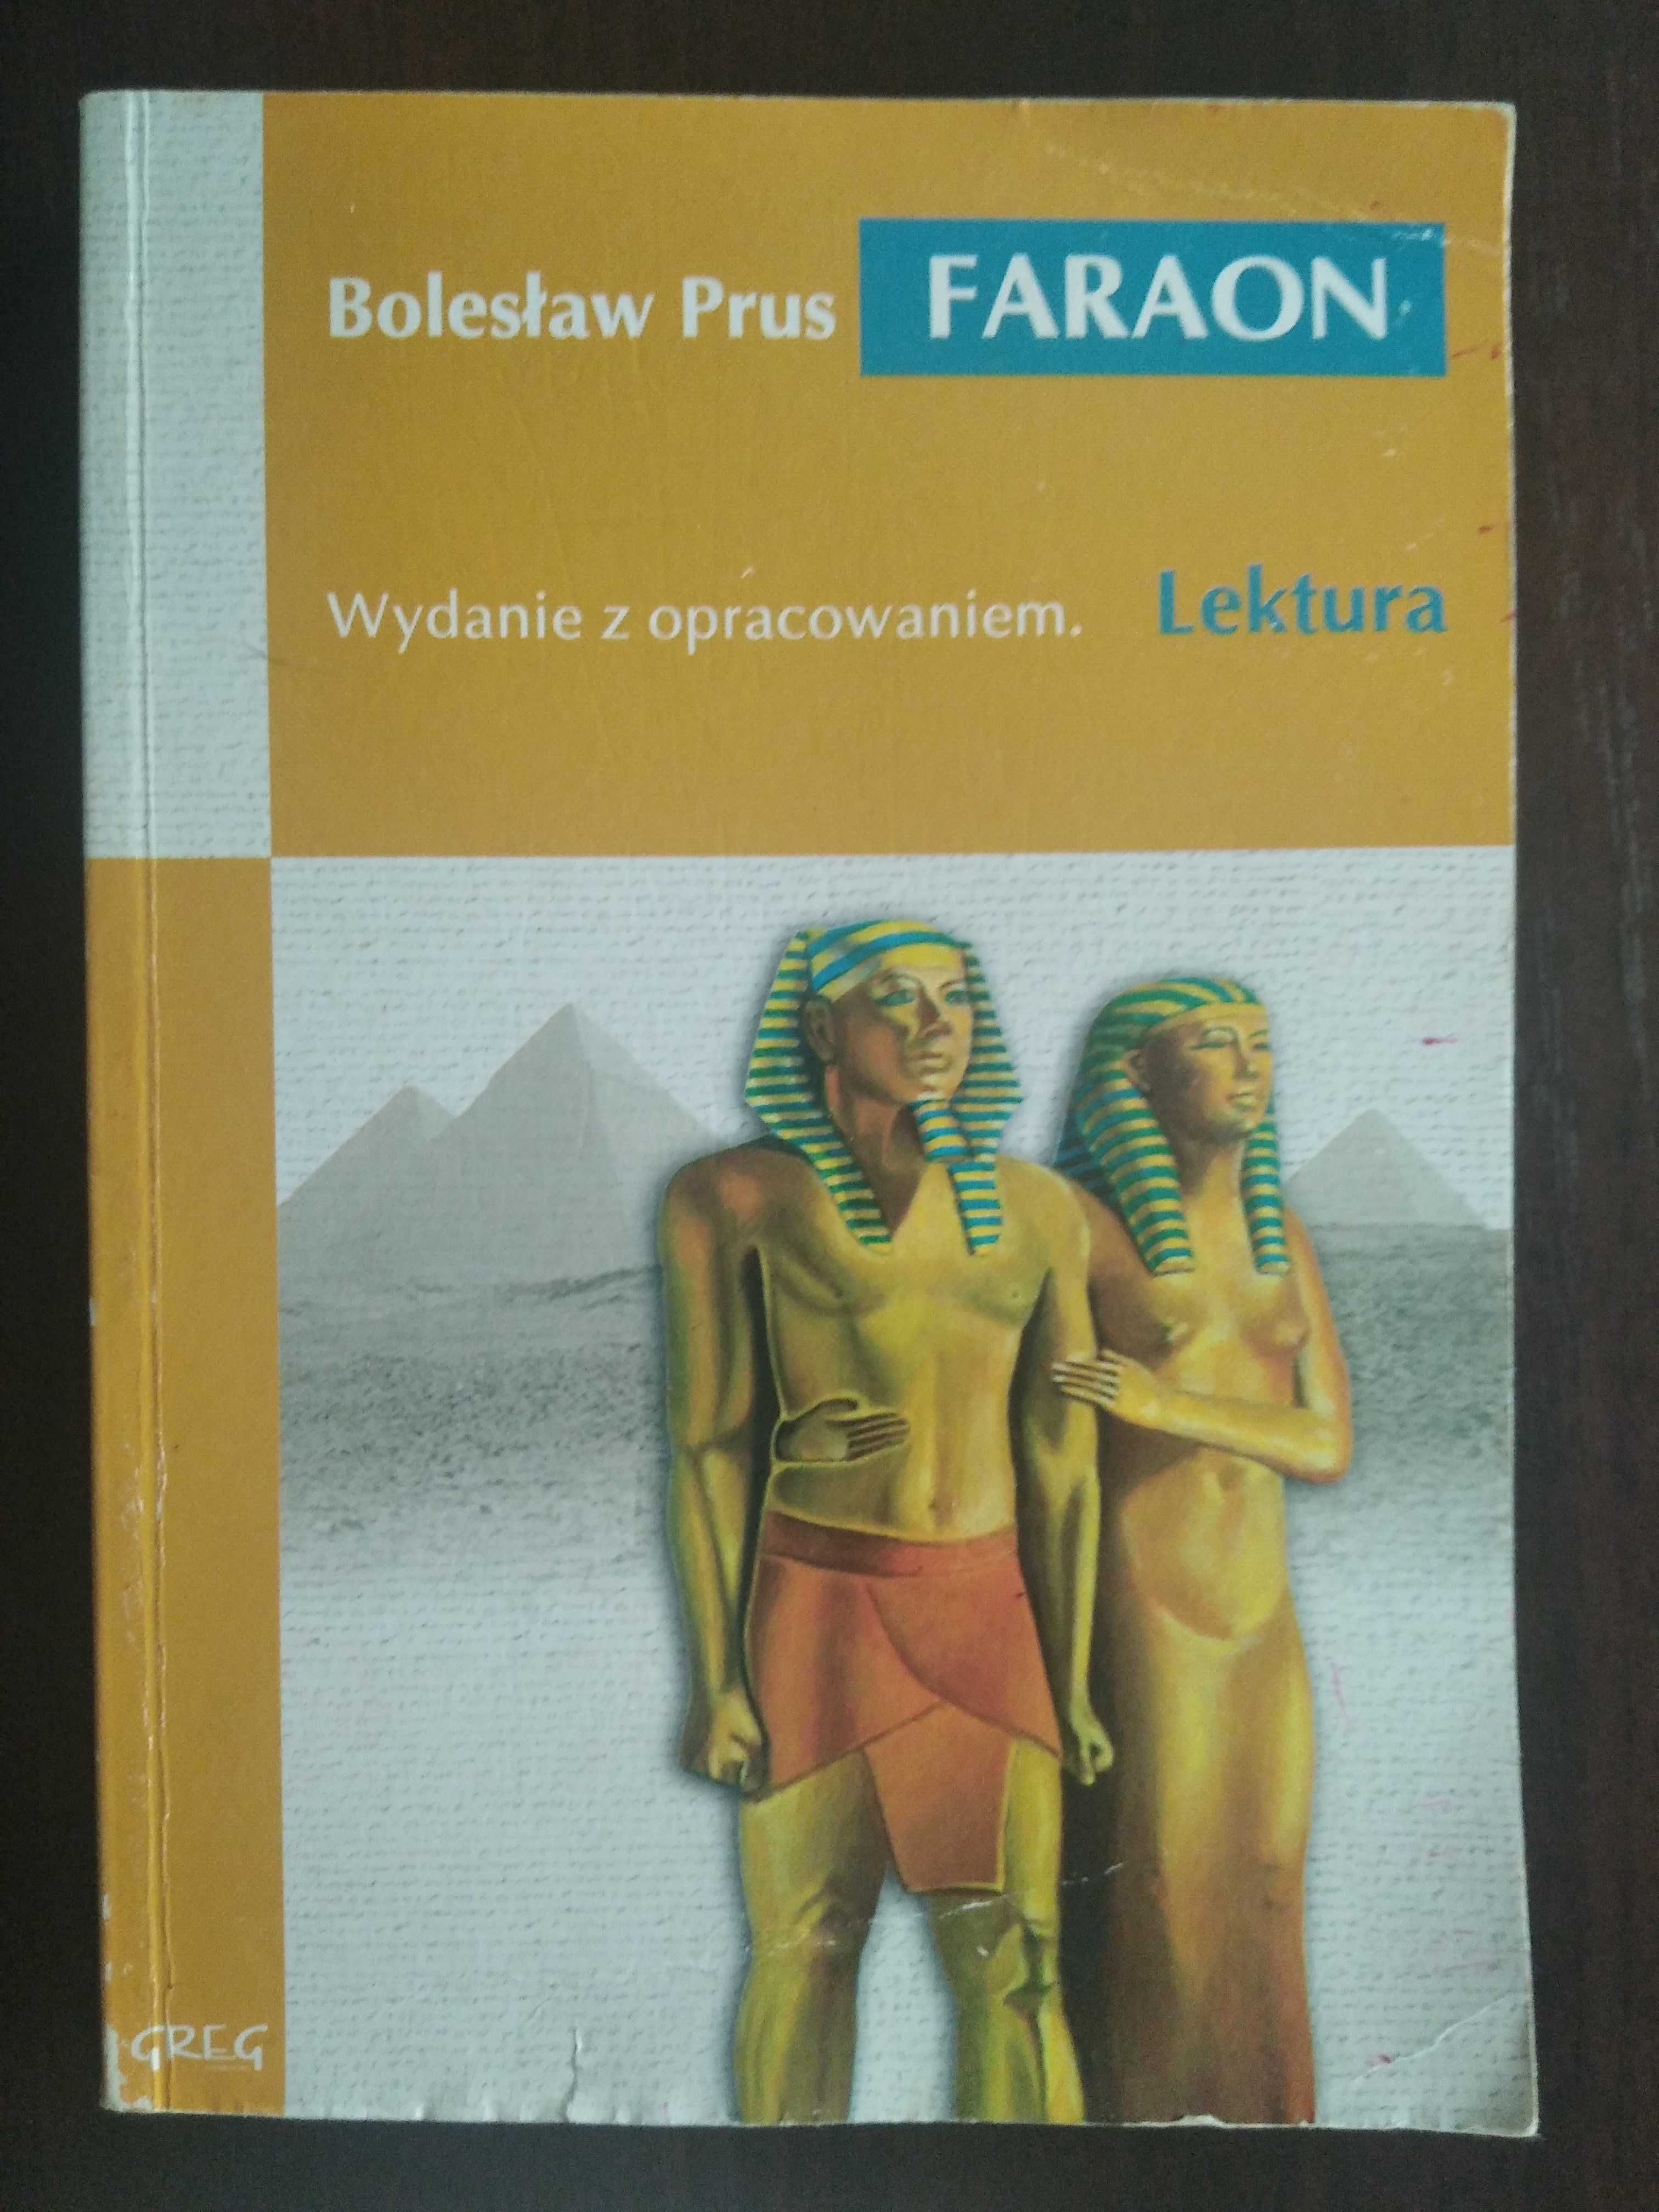 Faraon Bolesław Prus